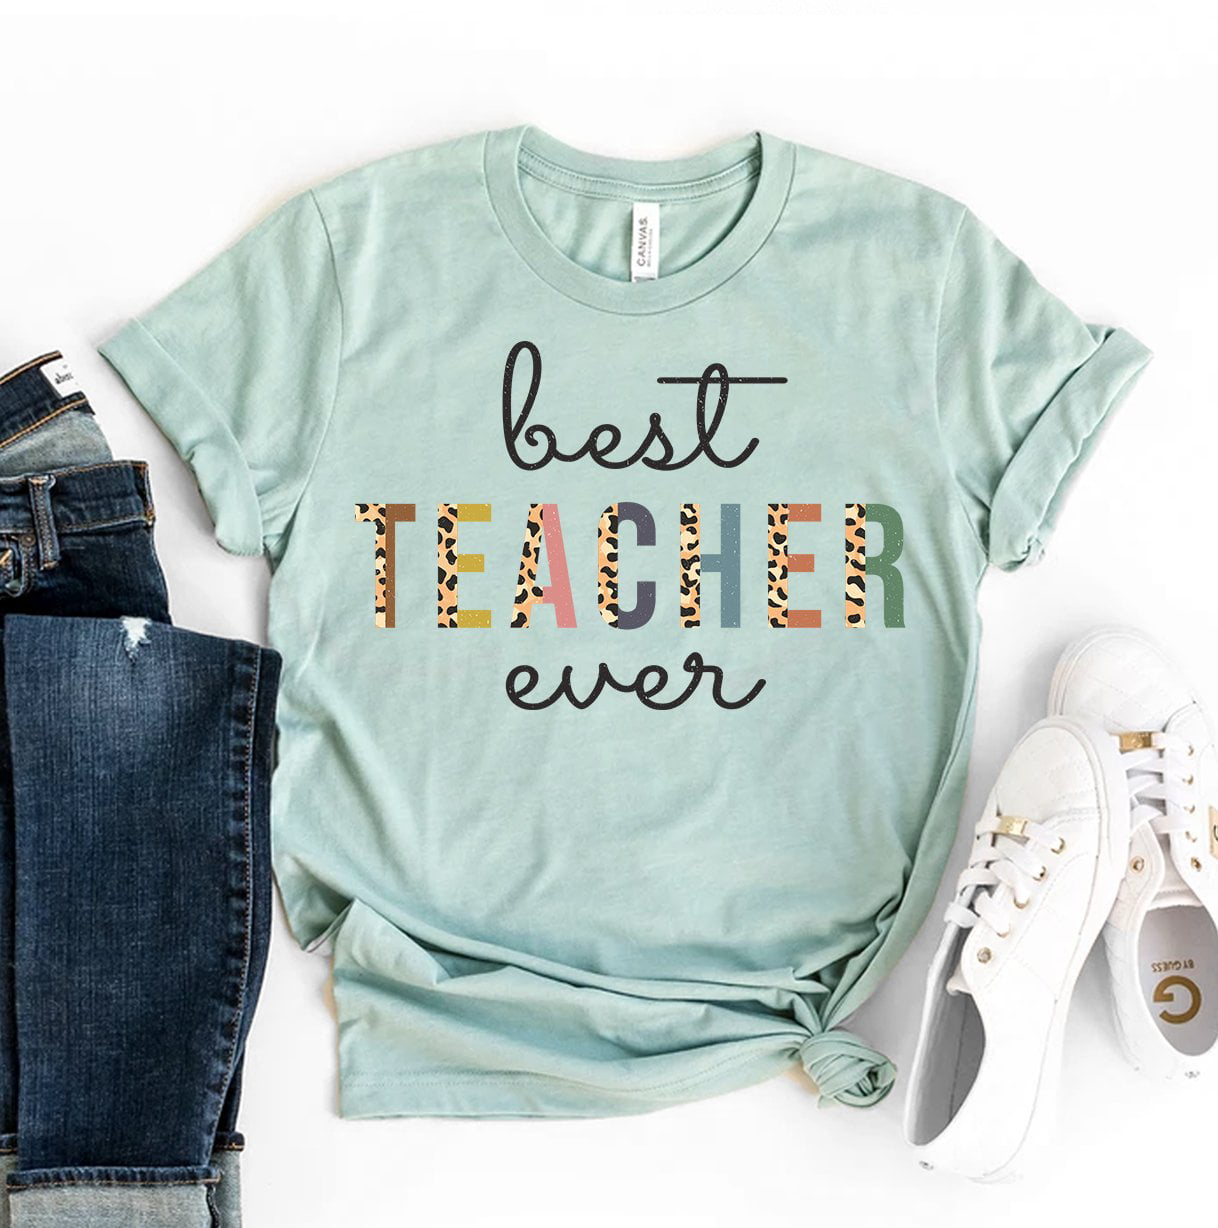 Kindergarten Fruit Education Pullover Teacher Sweater Elementary School Classroom Outfit Apple Pocket Sweatshirt Gift for Teacher